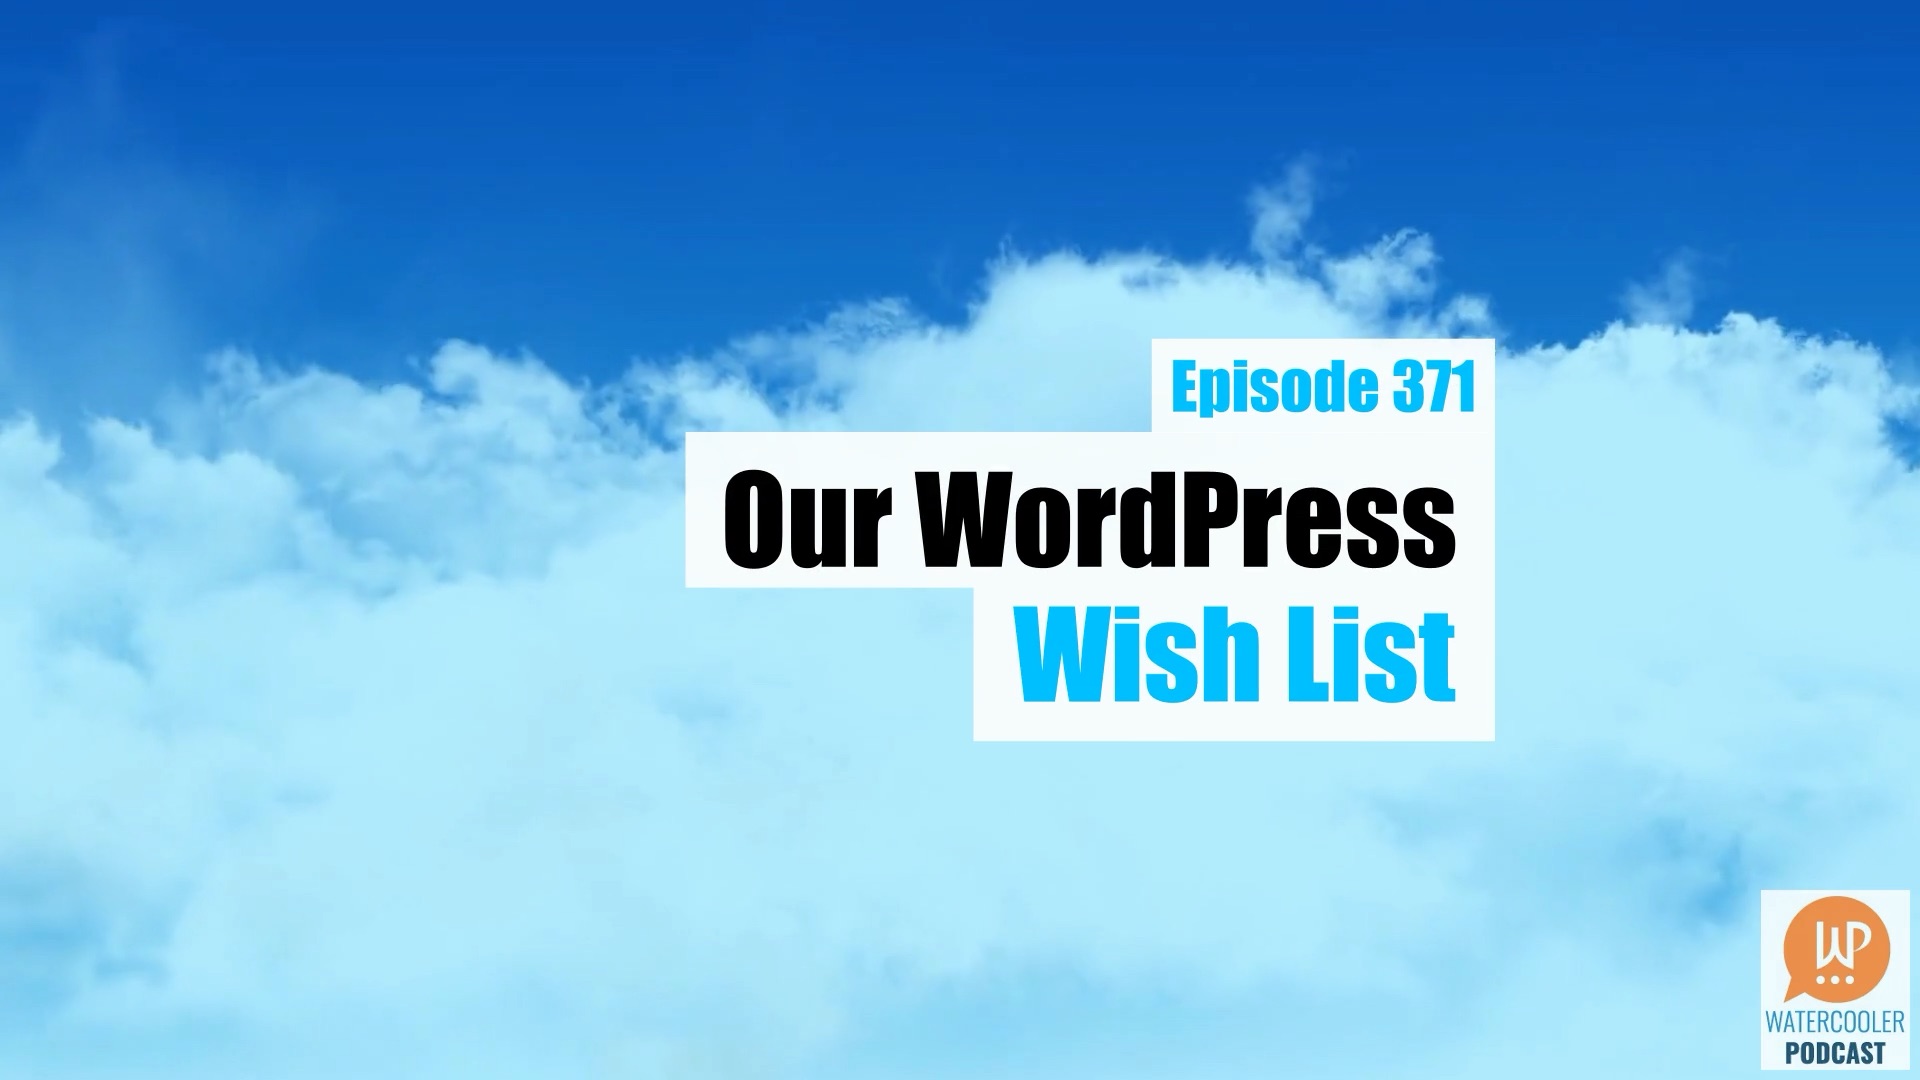 EP371 – Our WordPress Wish List